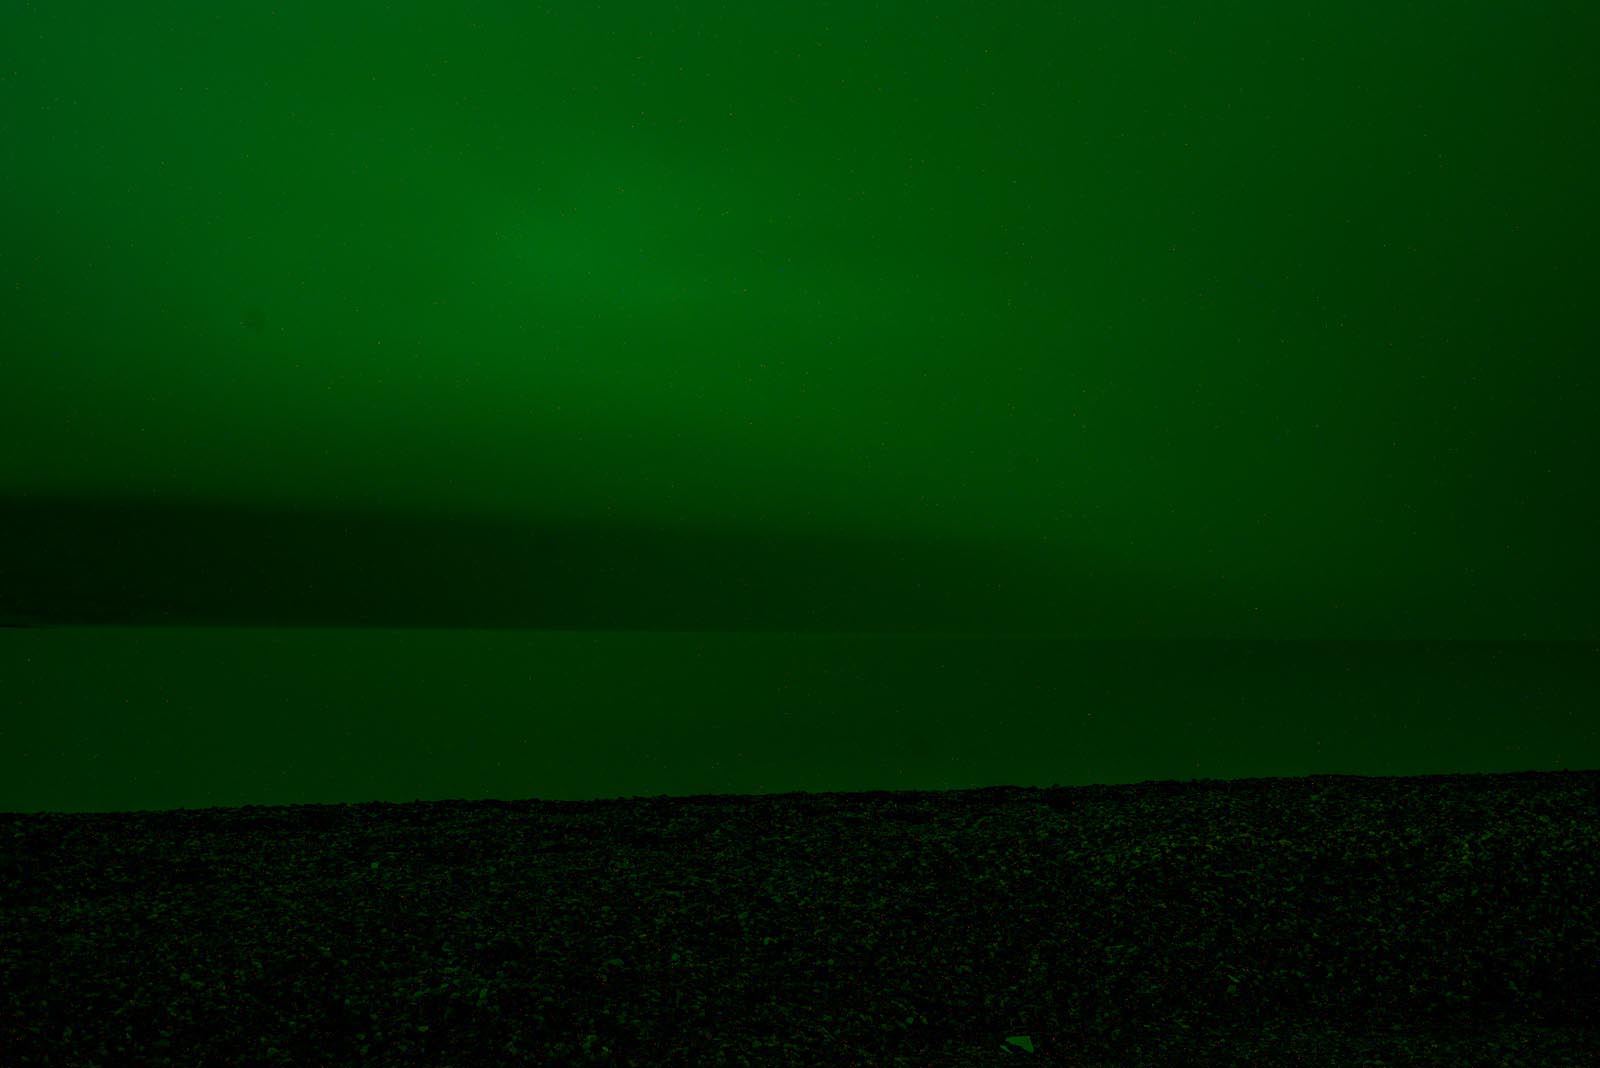 Darkland: Ethereal Greenland at Night (green beach)